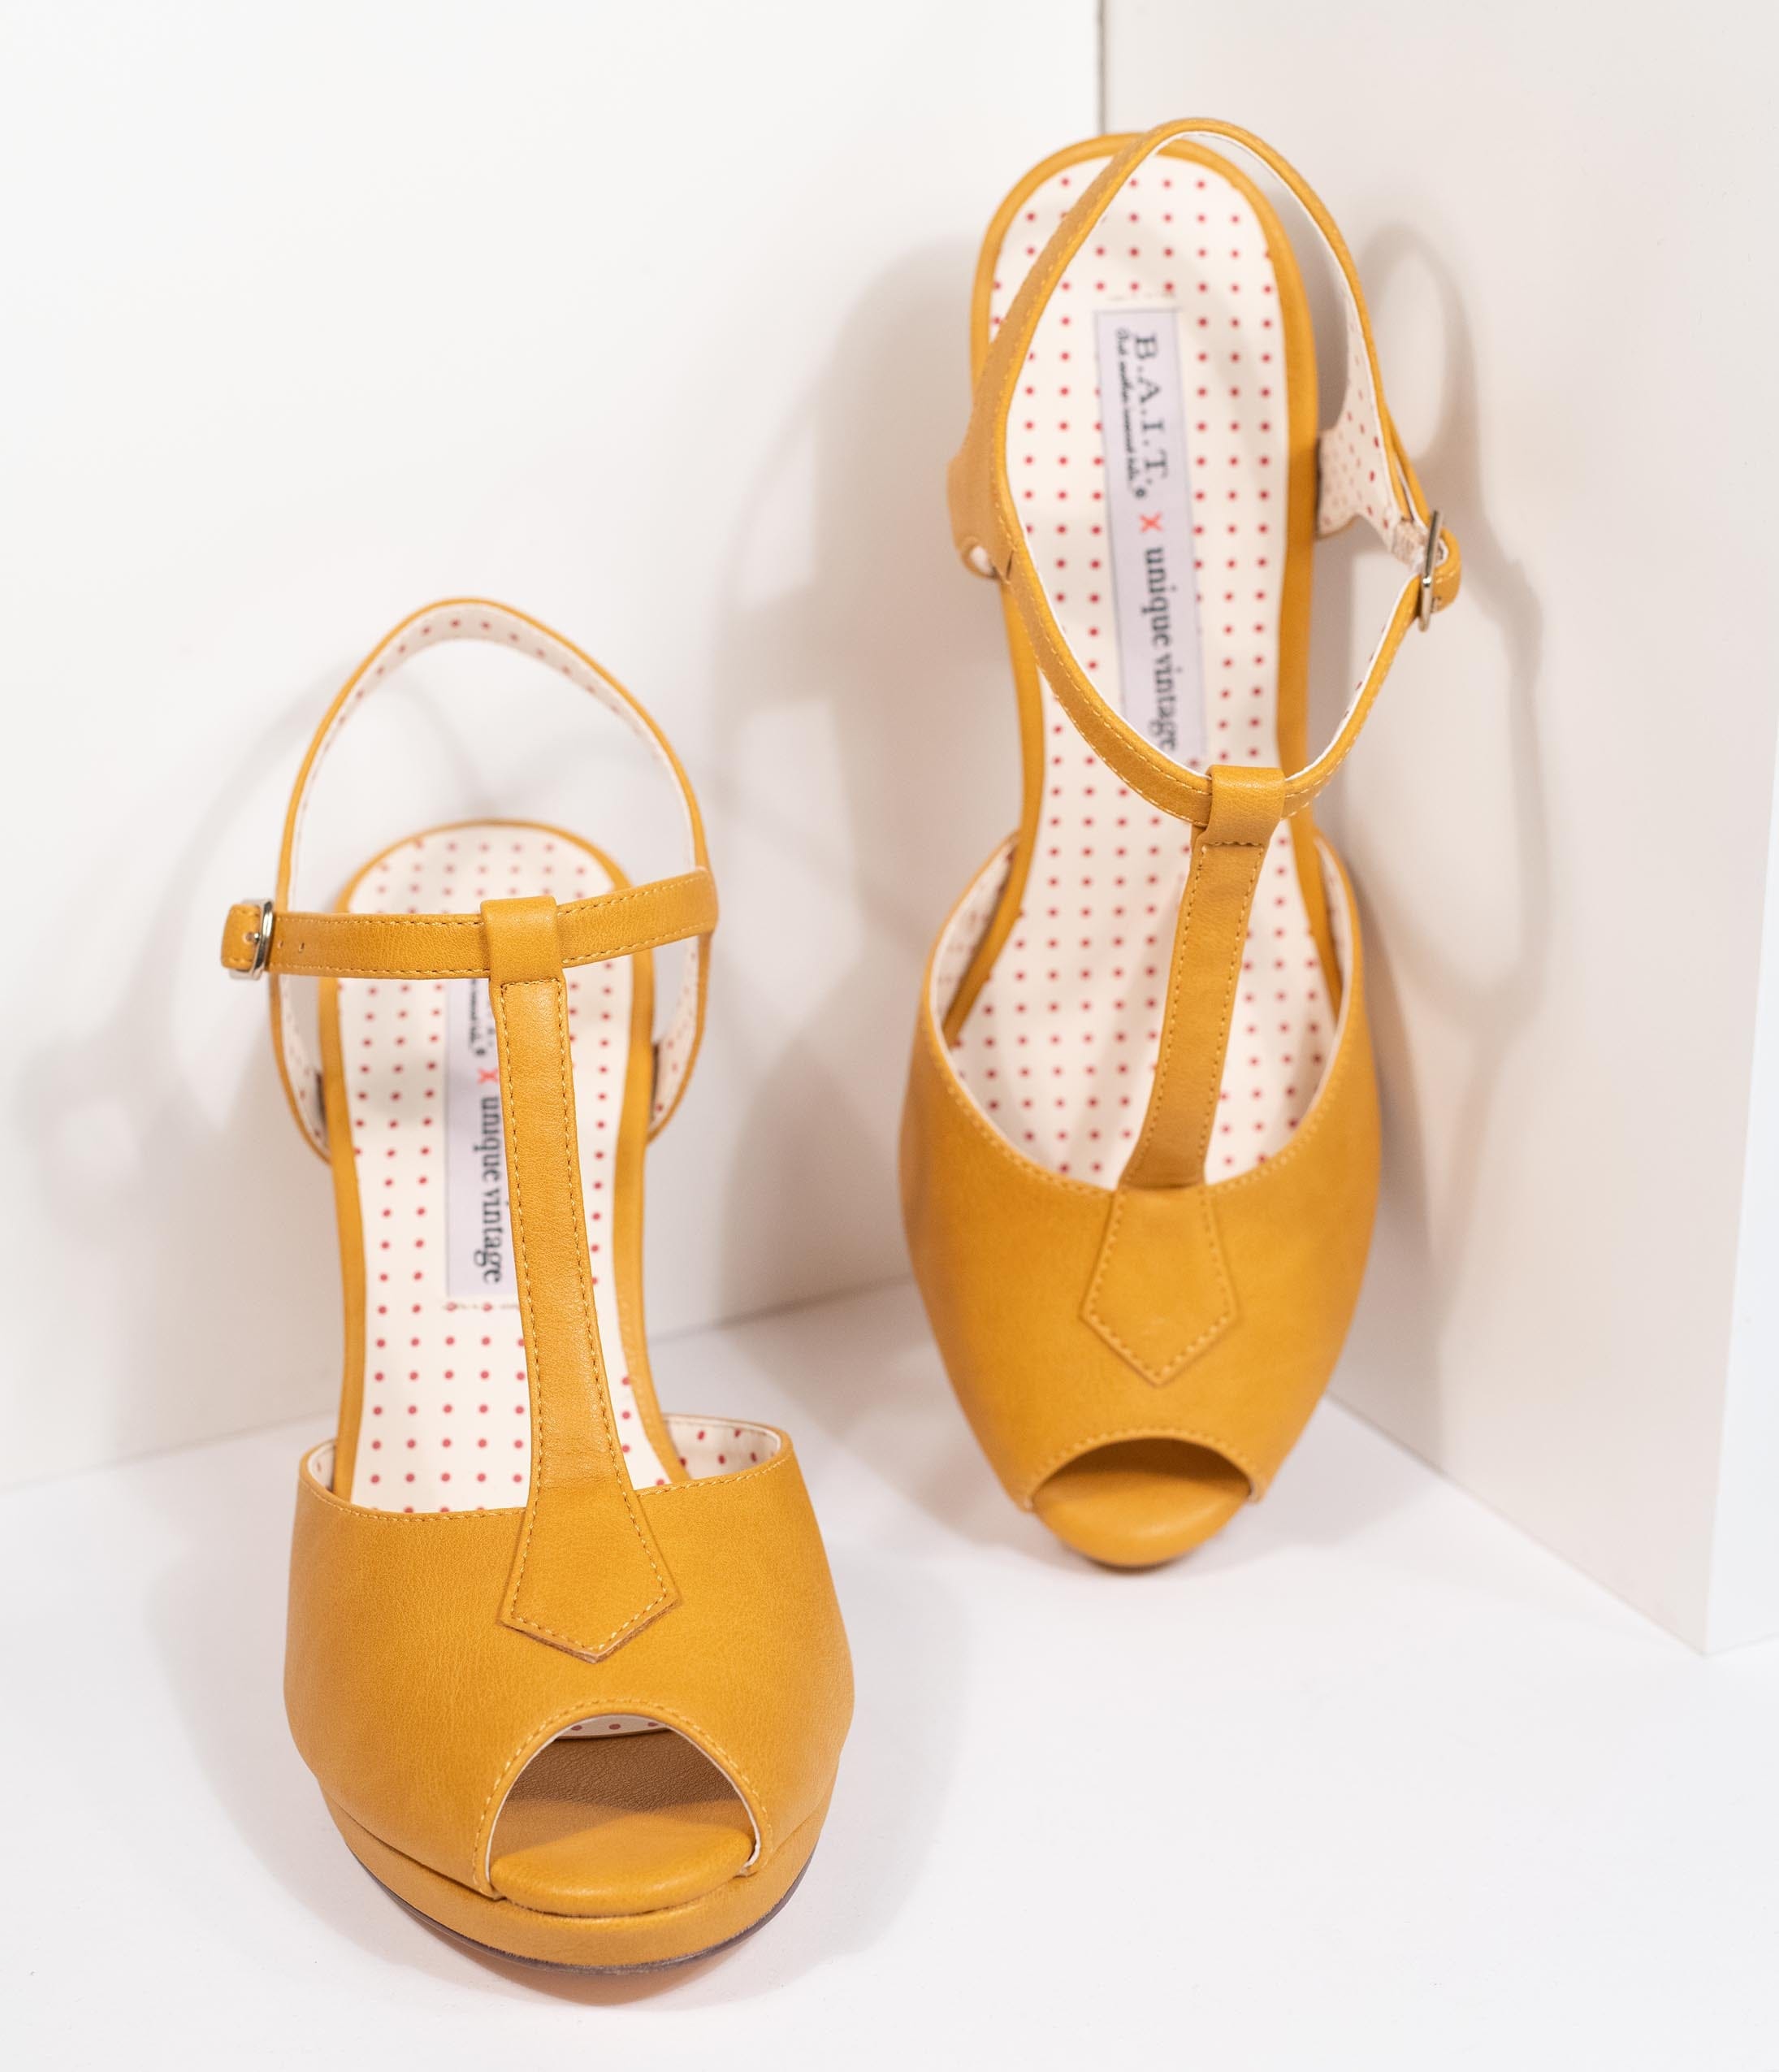 New 1940s Shoes: Wedge, Slingback, Oxford, Peep Toe